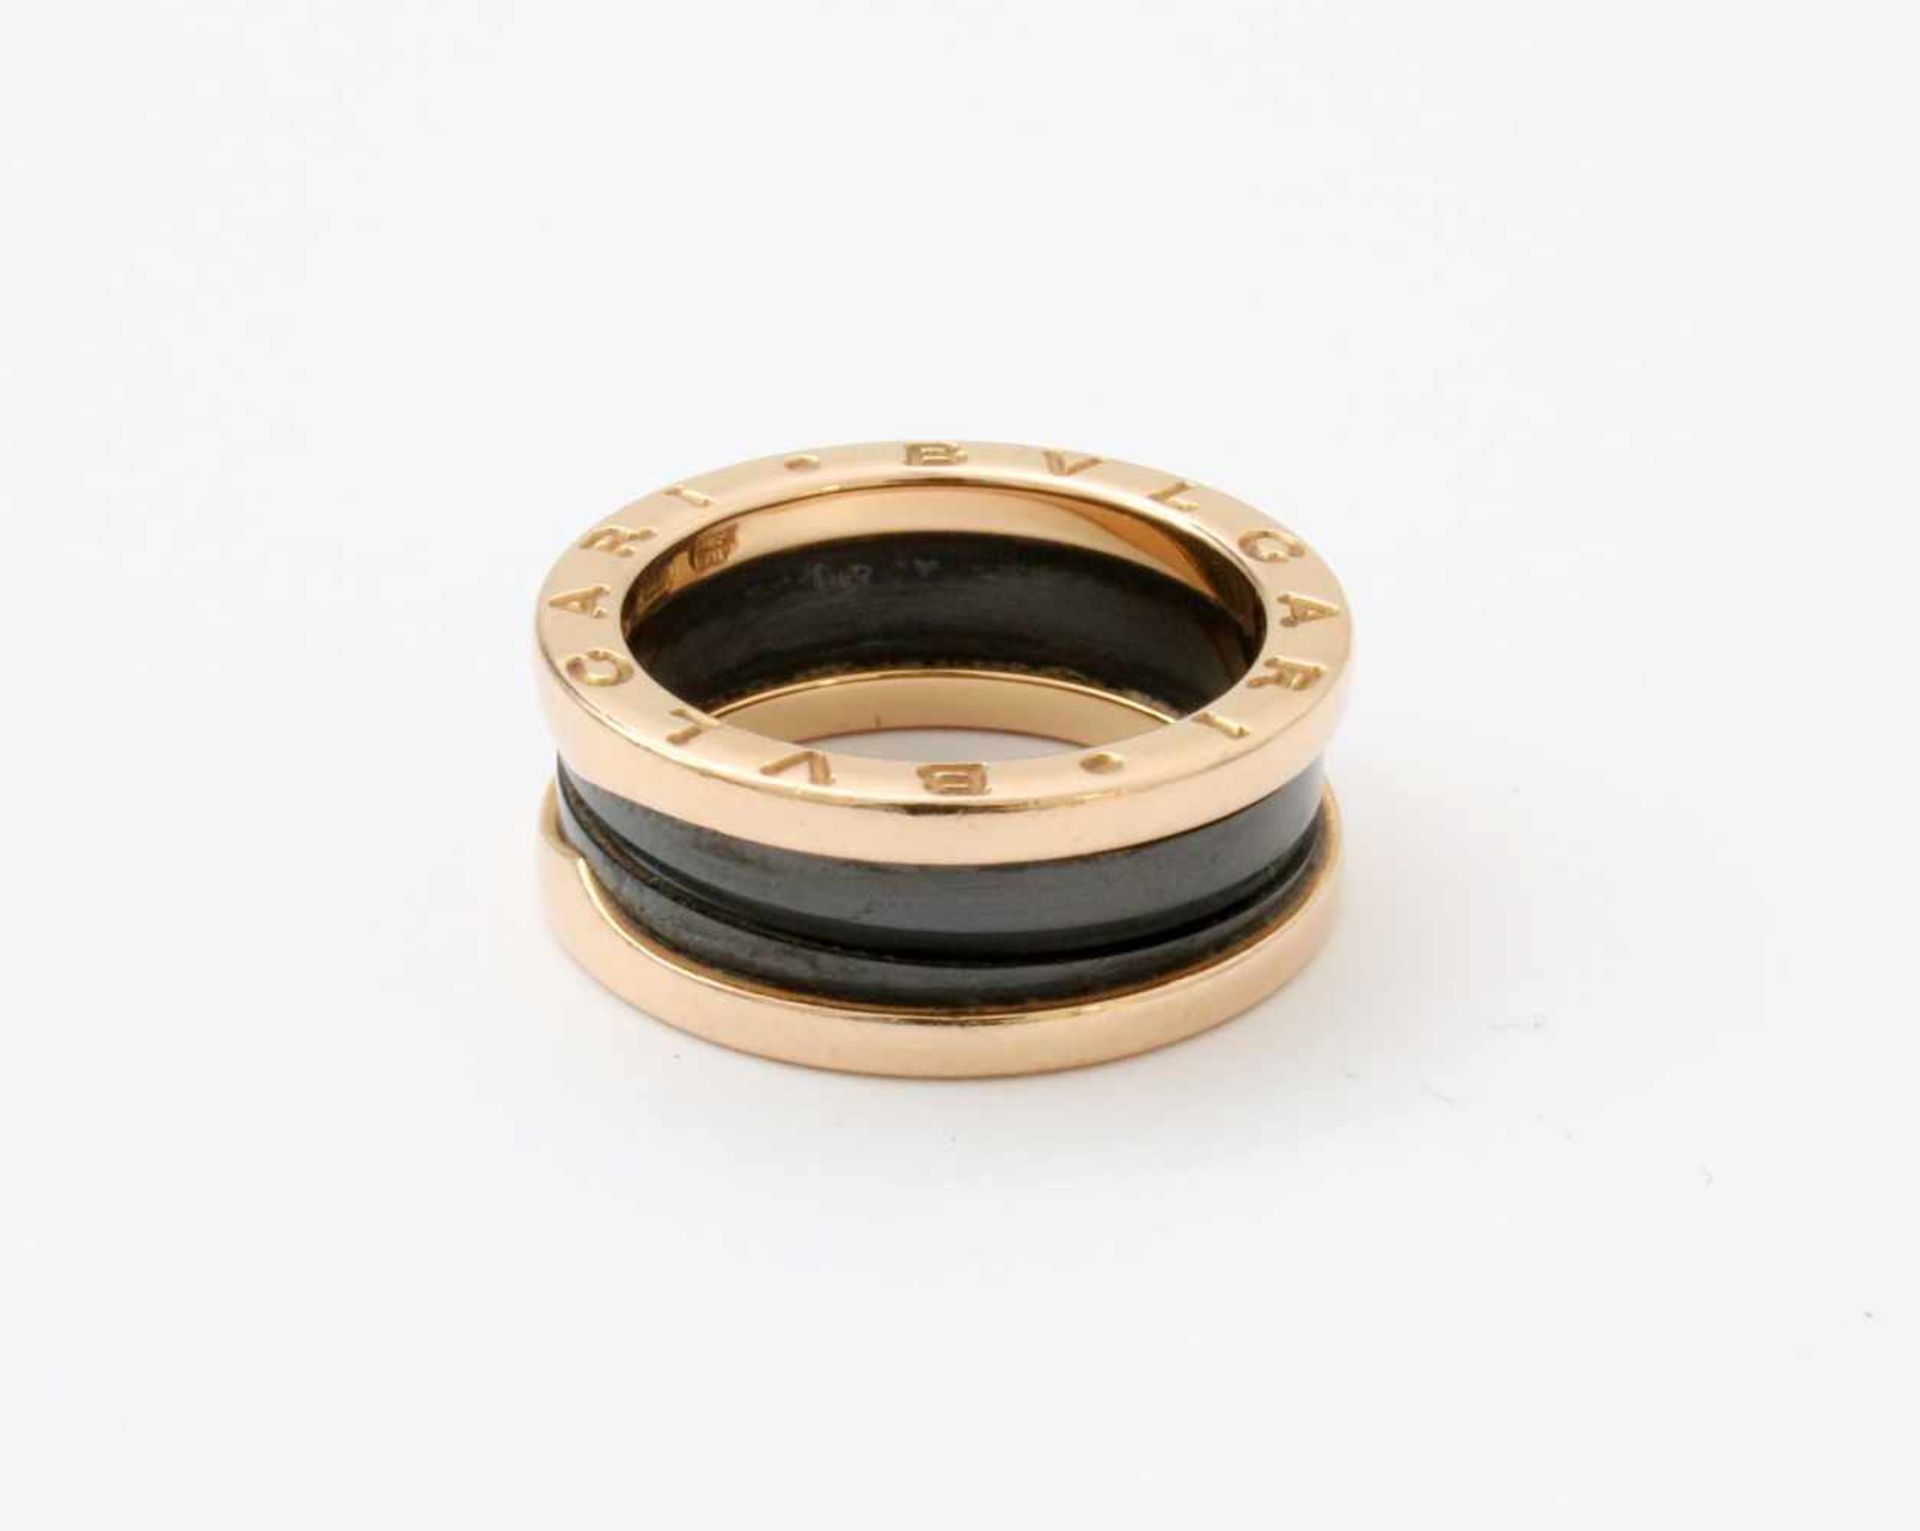 Rotgold Bulgari 2-Band Ring "B zero 1" RG 750, innen 2 Spiralen aus schwarzer Keramik, aktuelles - Image 2 of 2